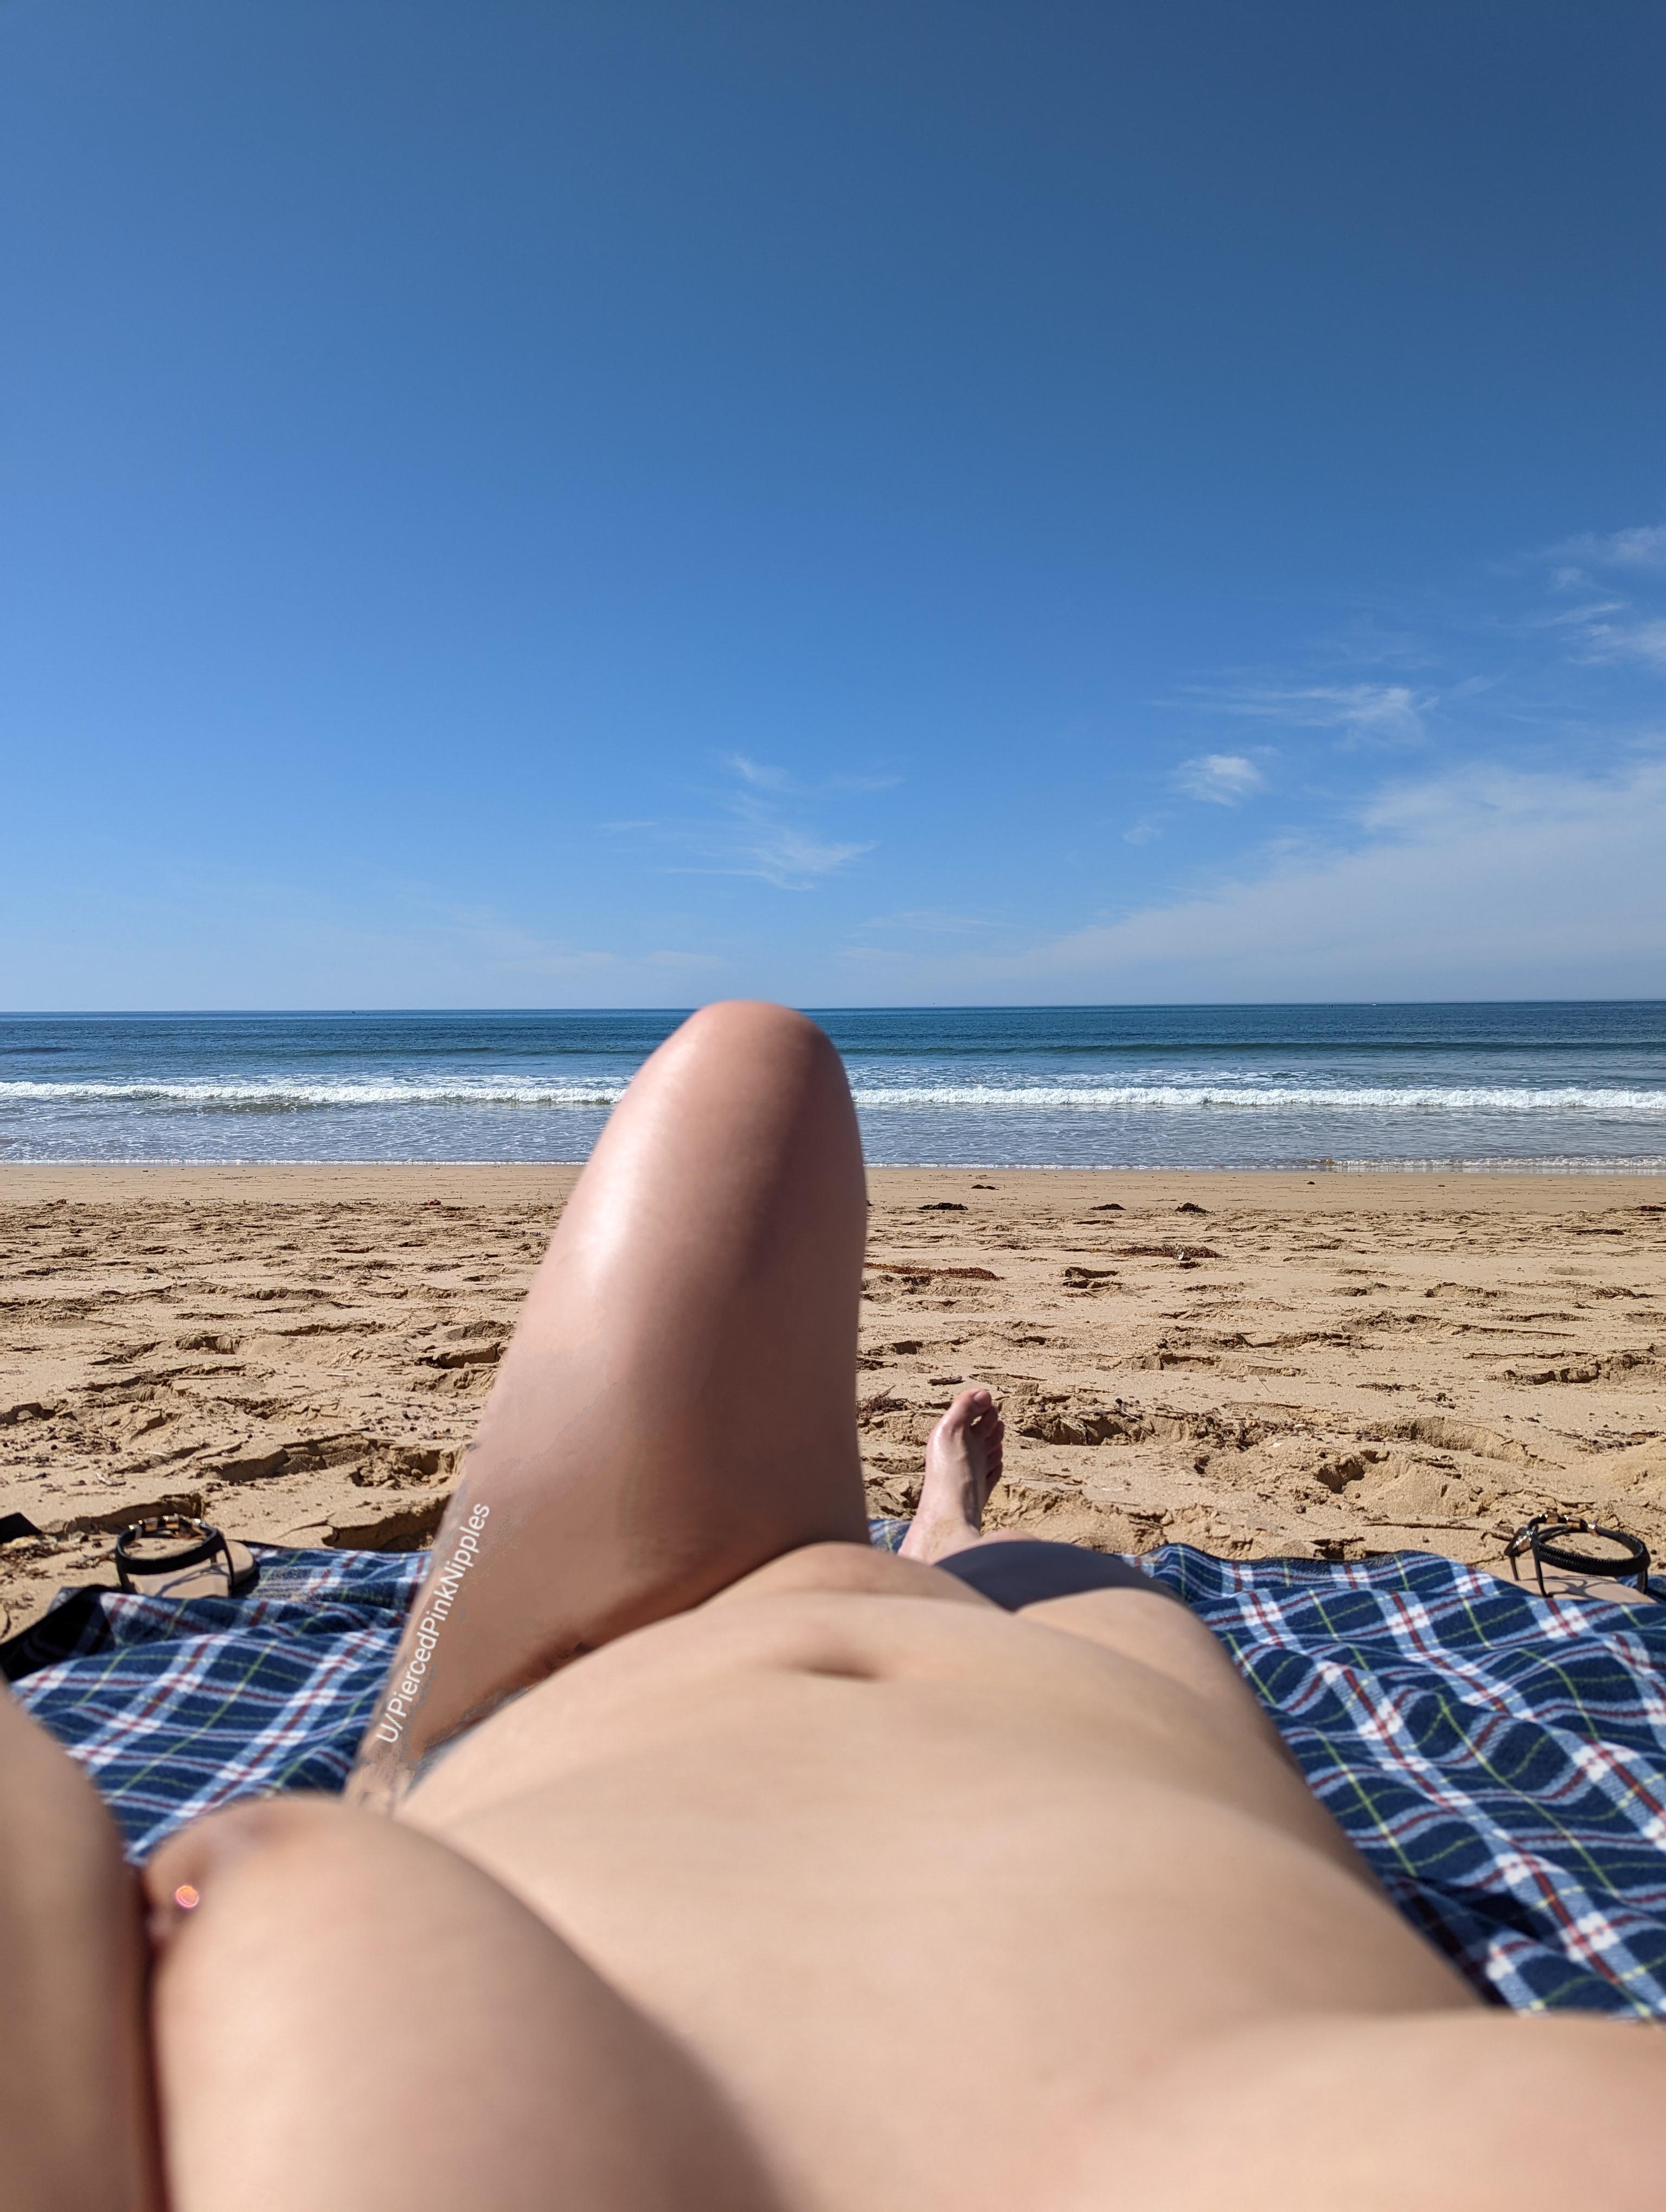 Buceta praia de nudismo